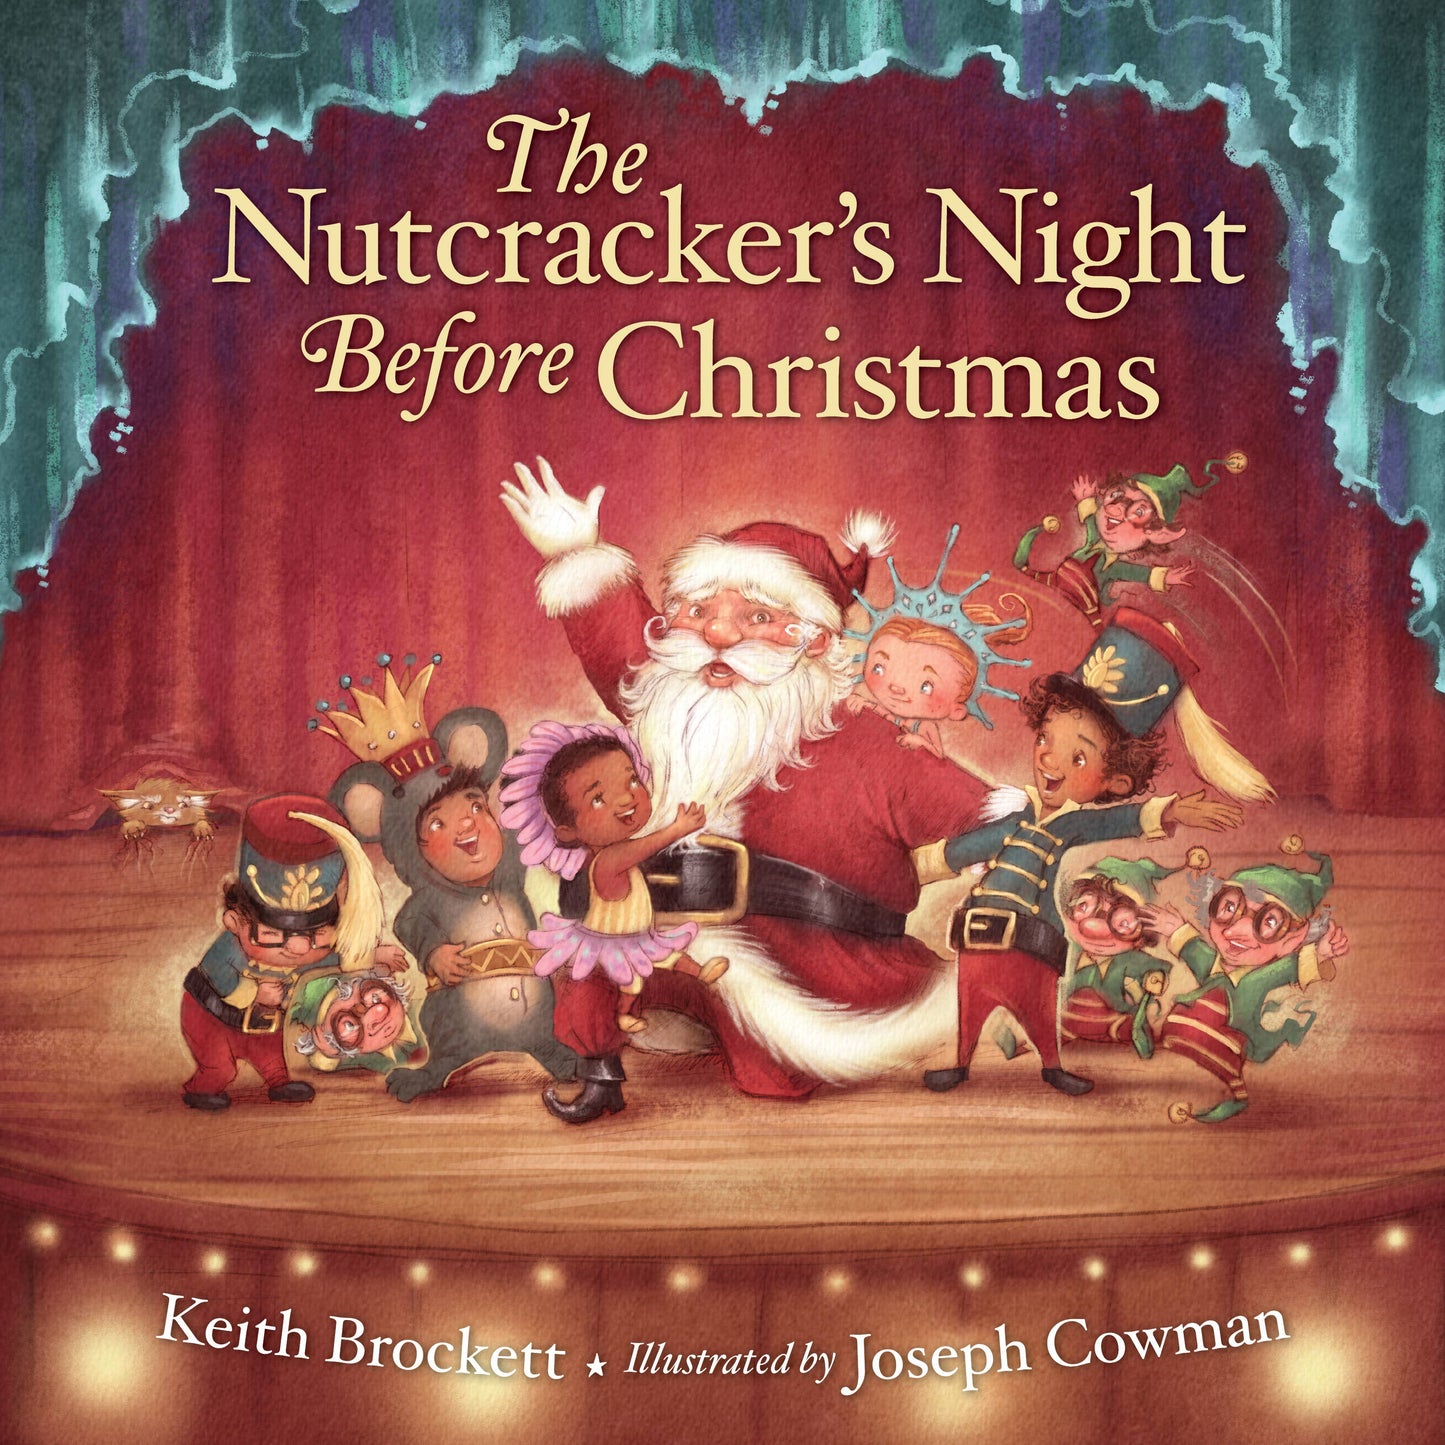 The Nutcracker's Night Before Christmas